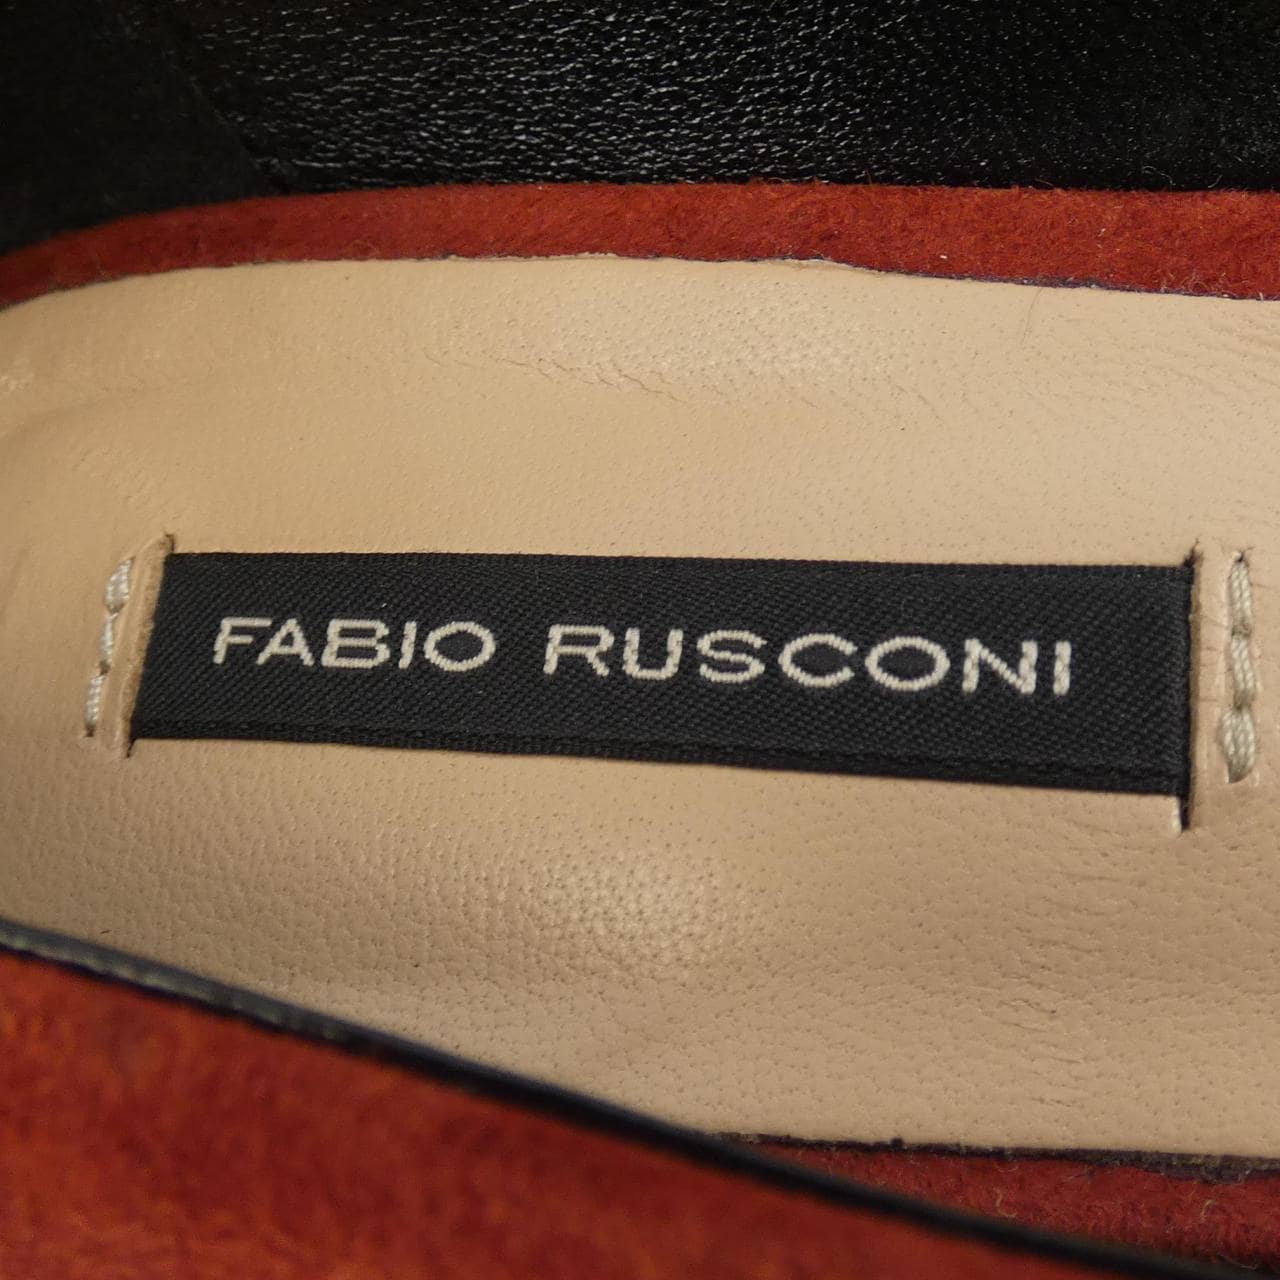 Fabio Rusconi pumps